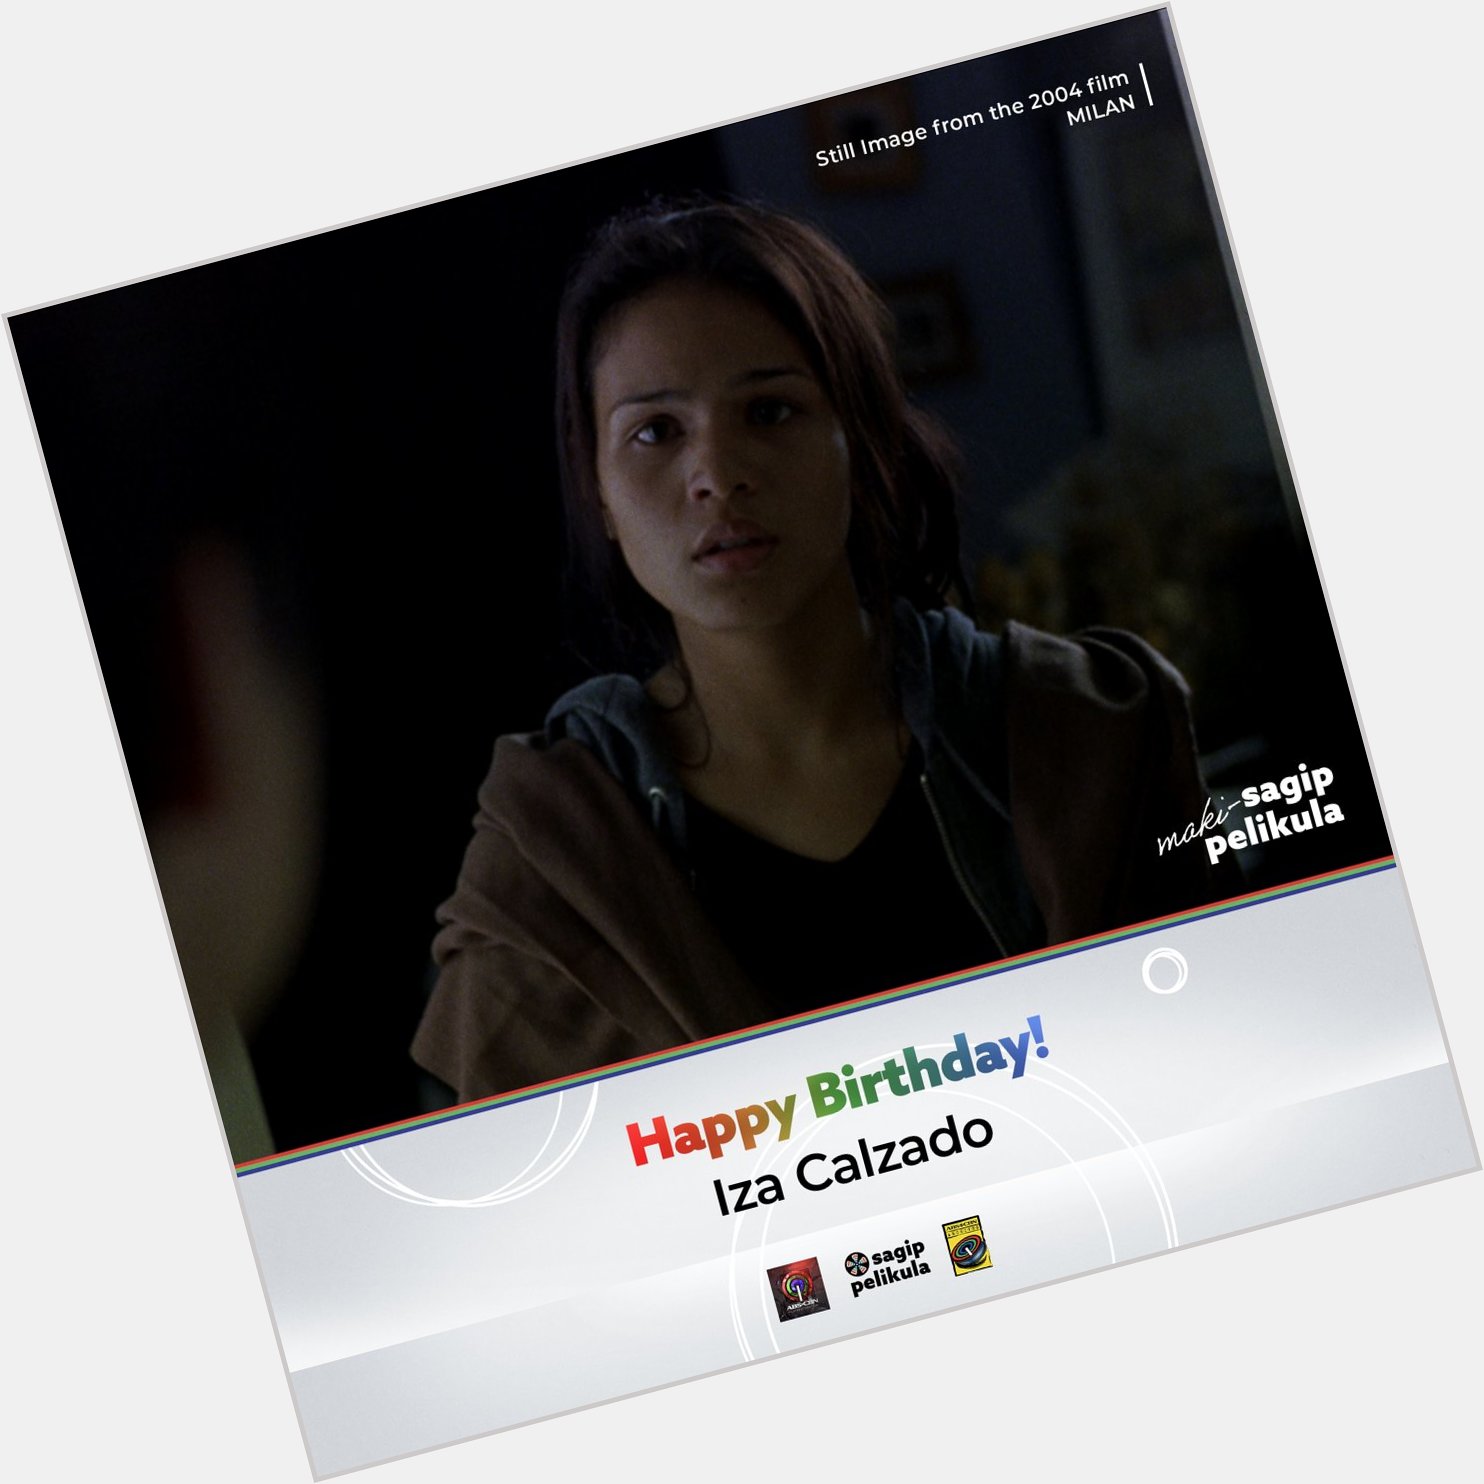 Happy birthday to Iza Calzado!

What\s your favorite film of hers?   